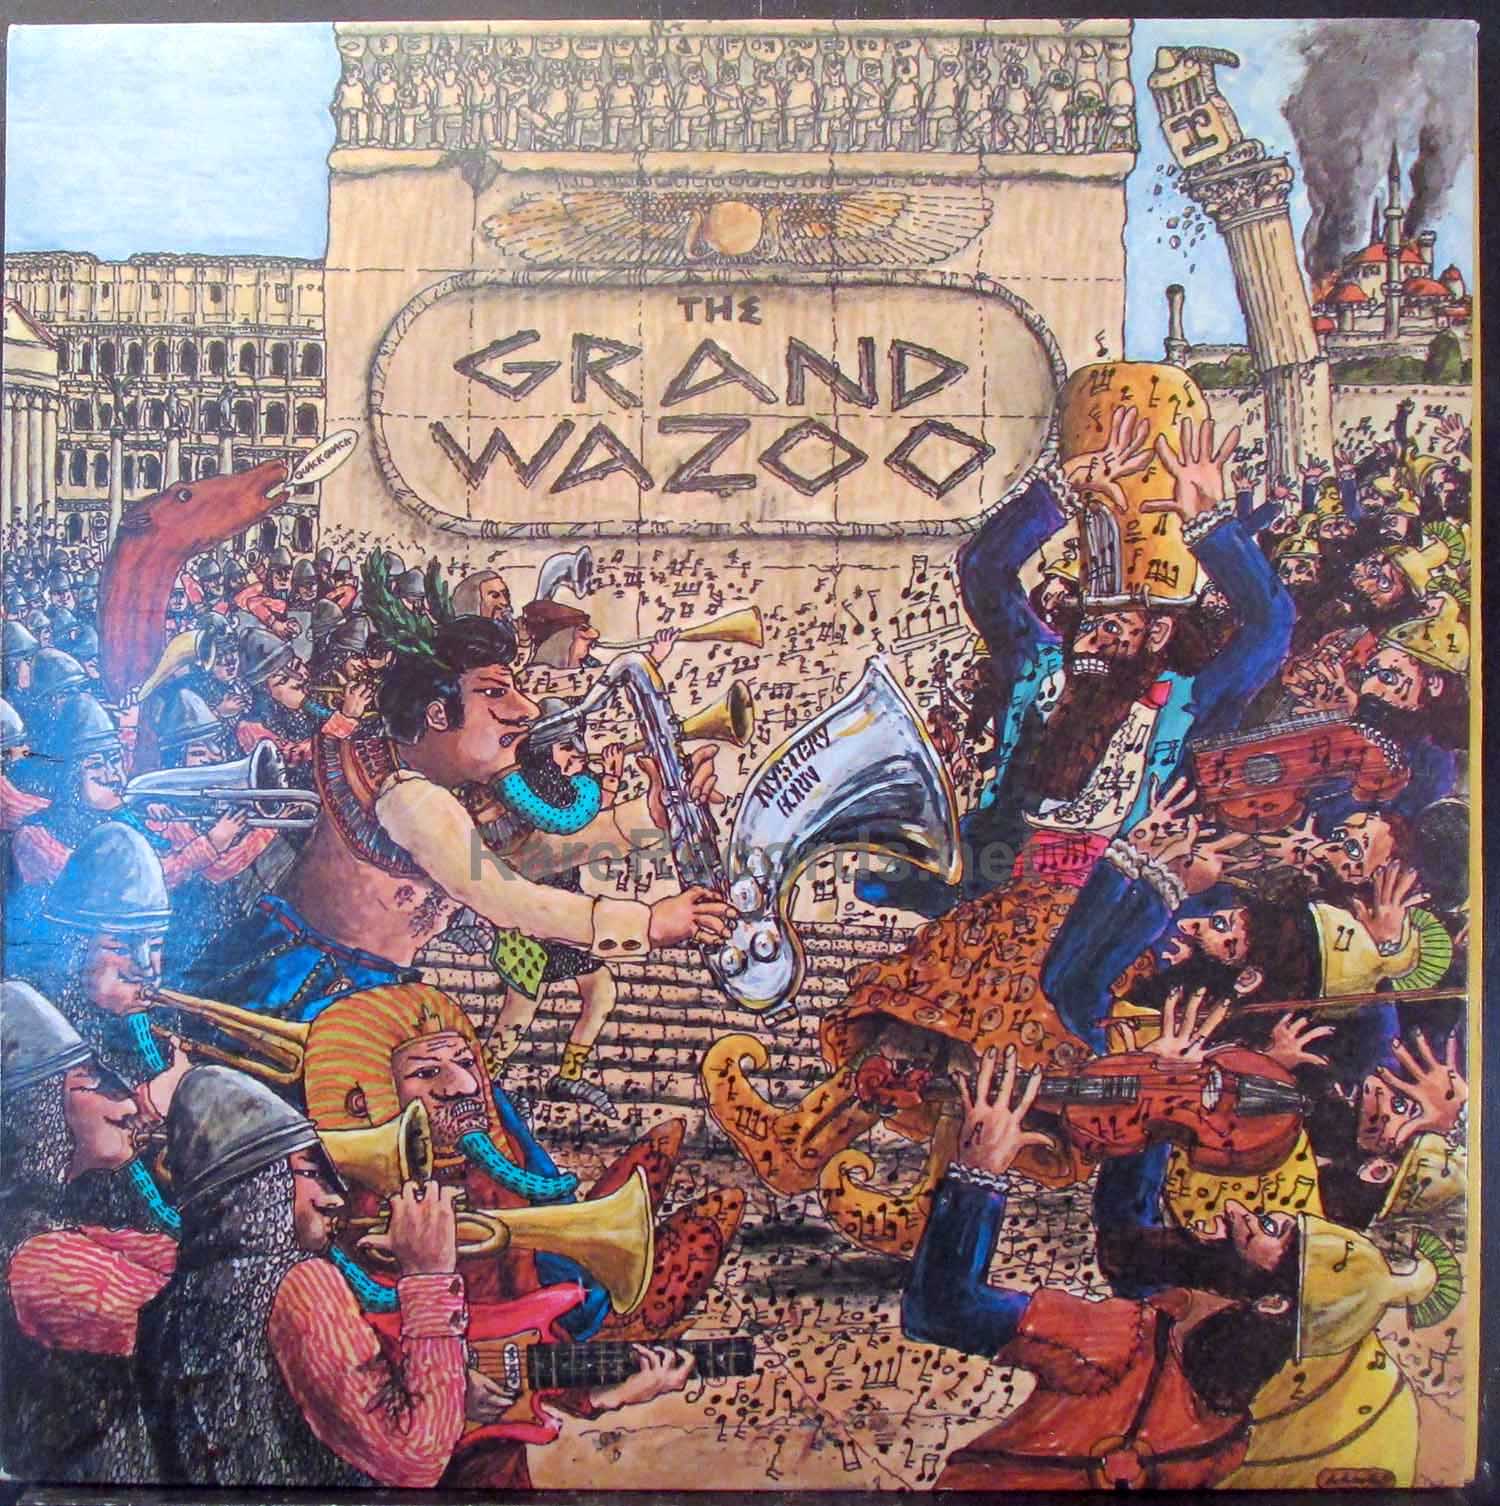 Frank Zappa – The Grand Wazoo 1972 U.S. LP